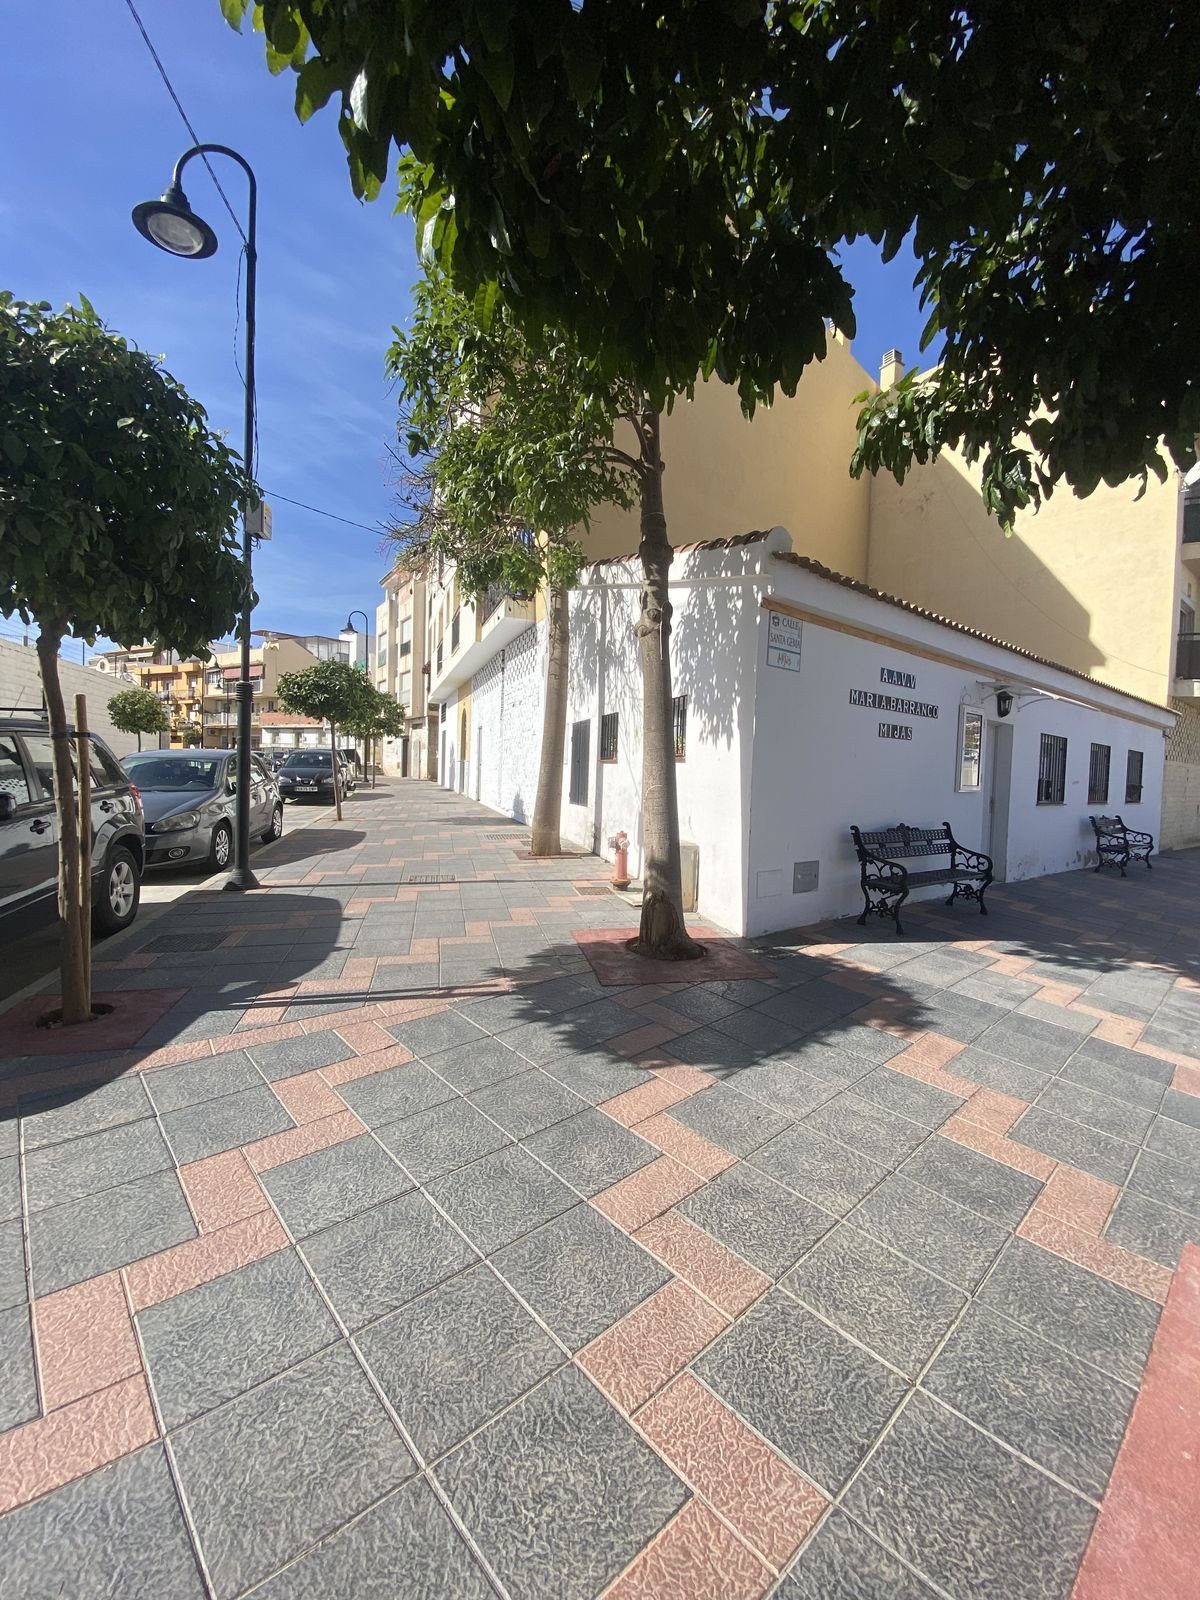 Commercial Commercial Premises in Fuengirola, Costa del Sol
